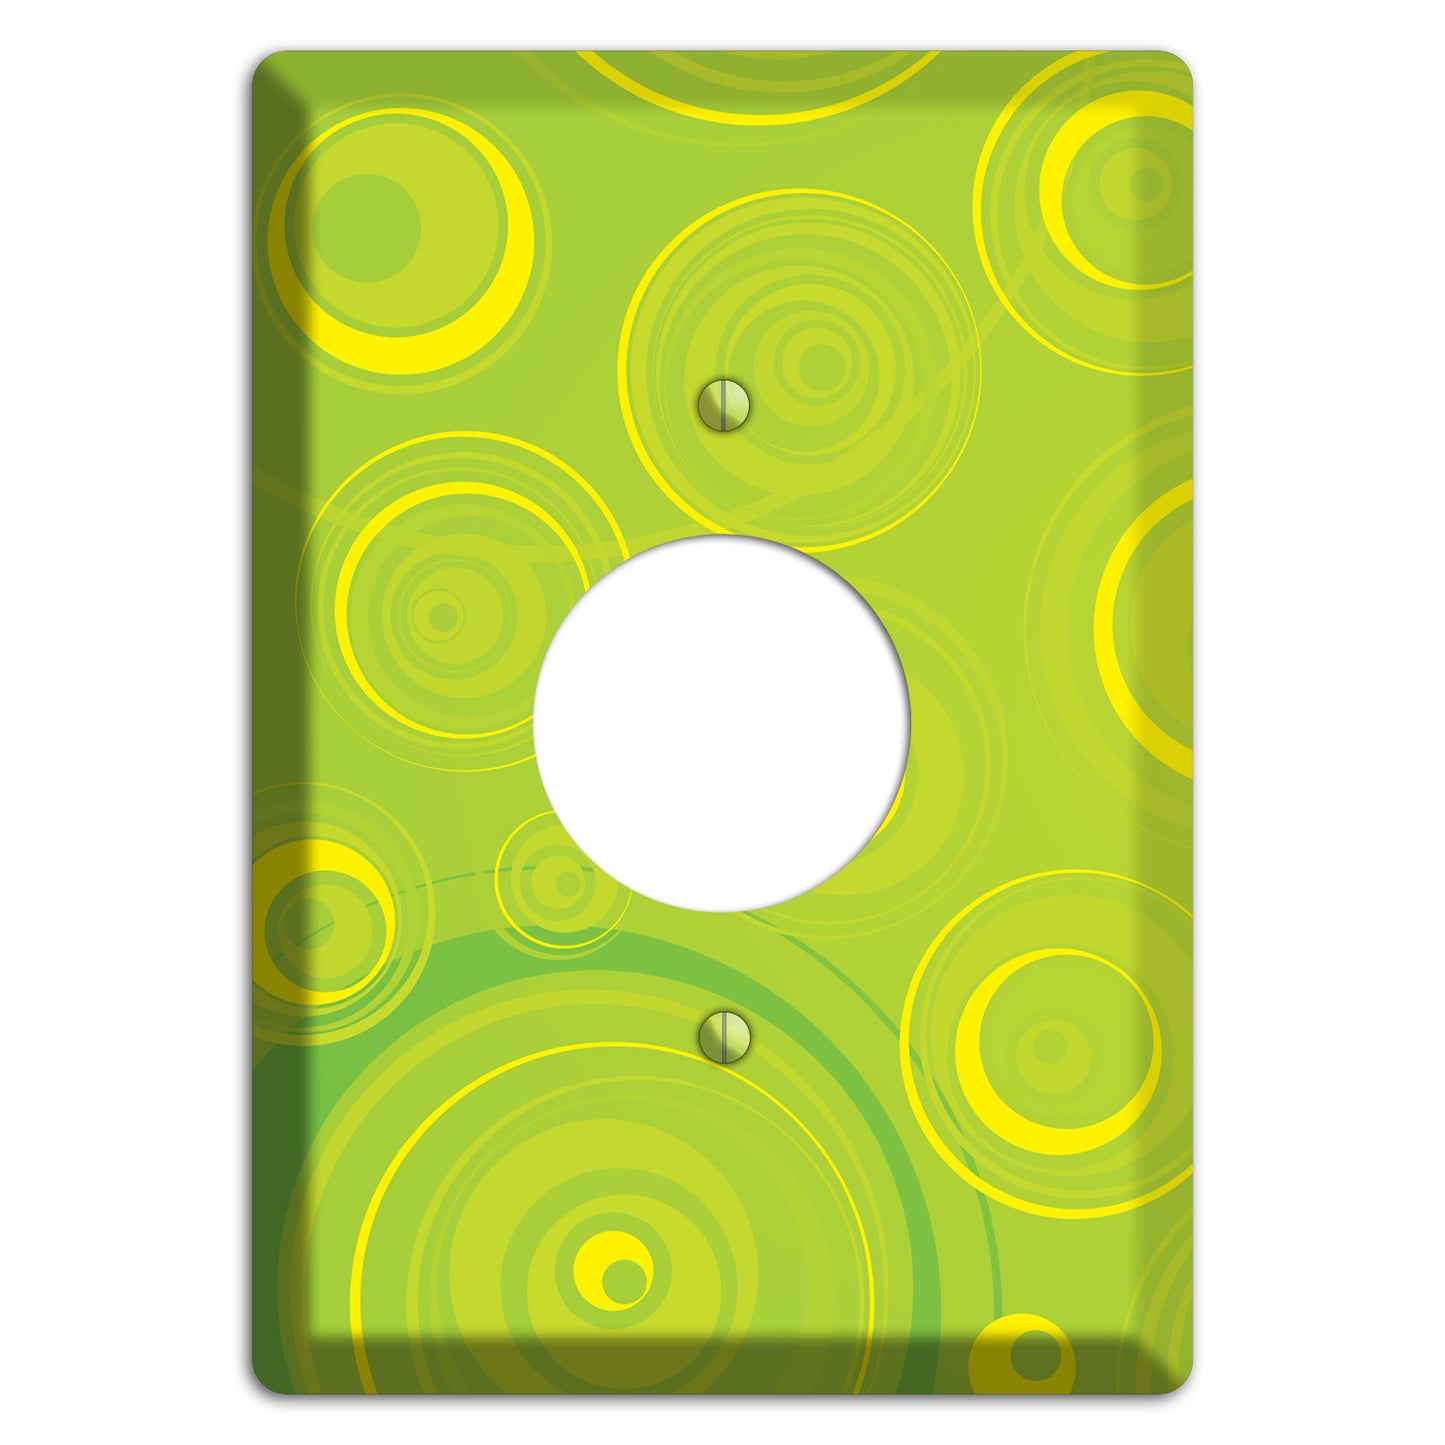 Green-yellow Circles Single Receptacle Wallplate